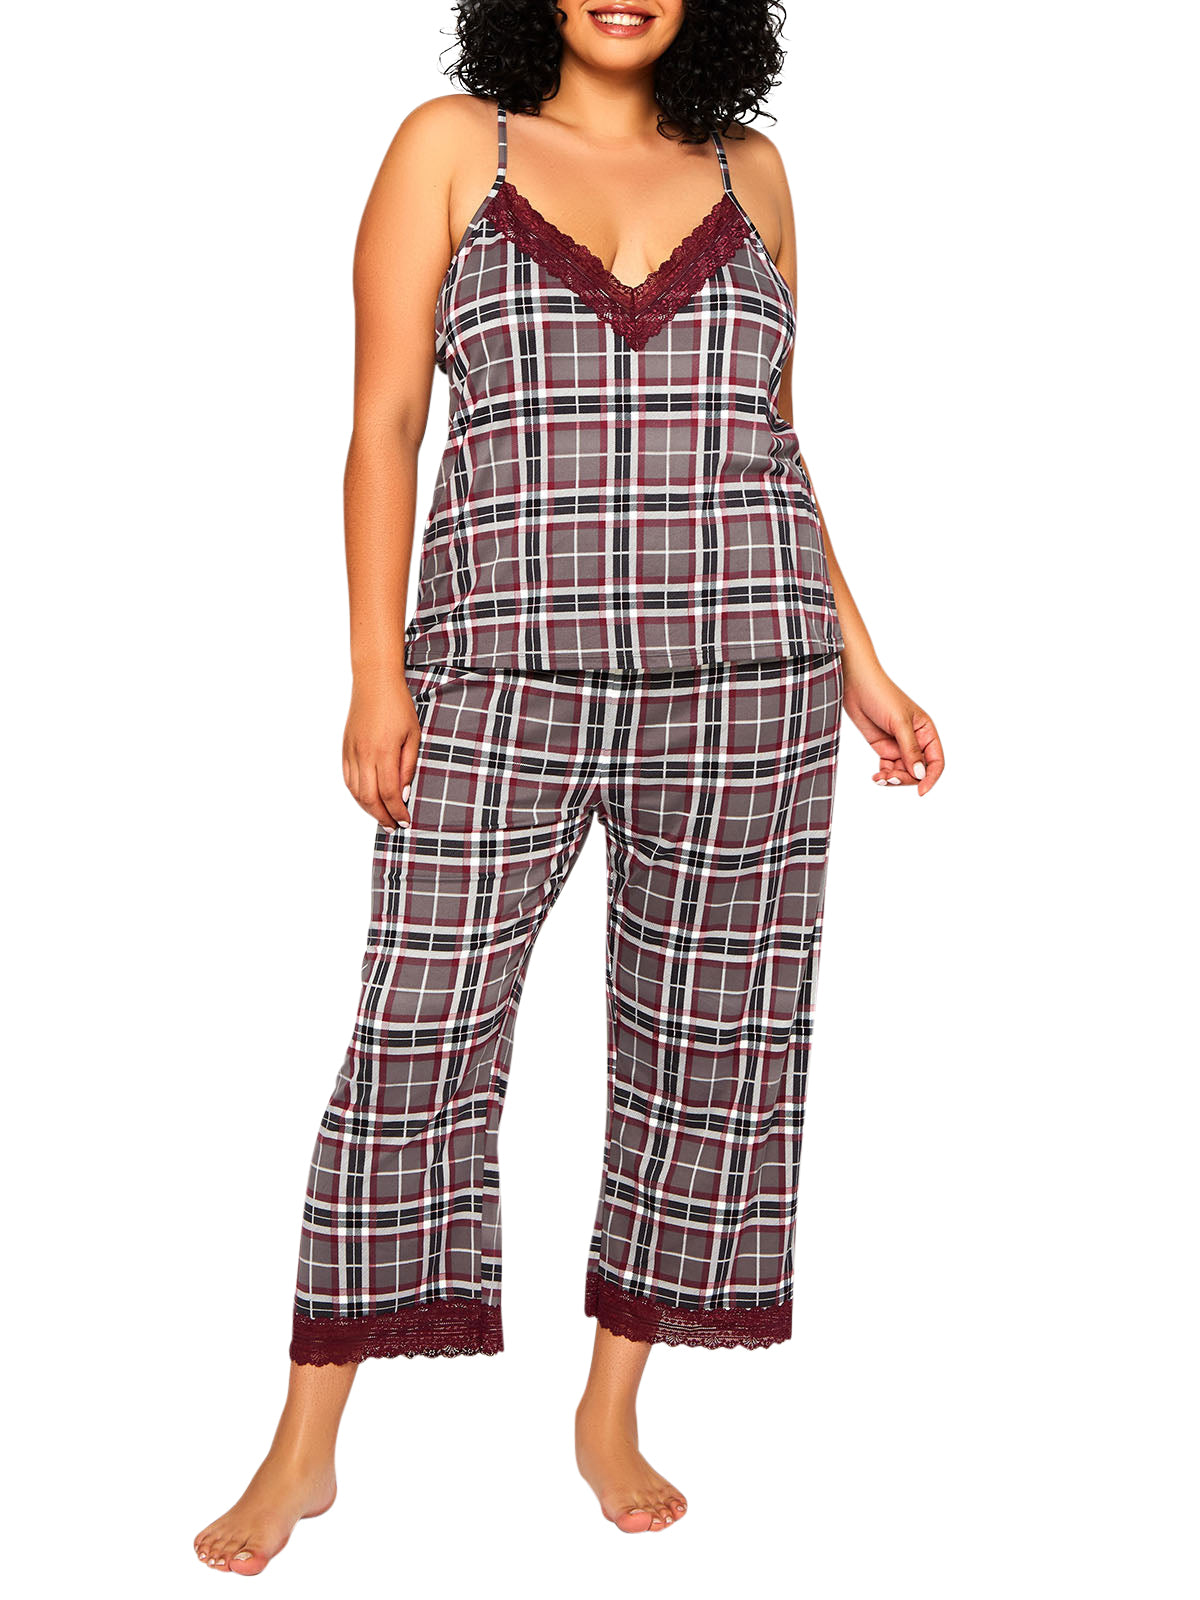 iCollection Jessie Plus Size Pajamas